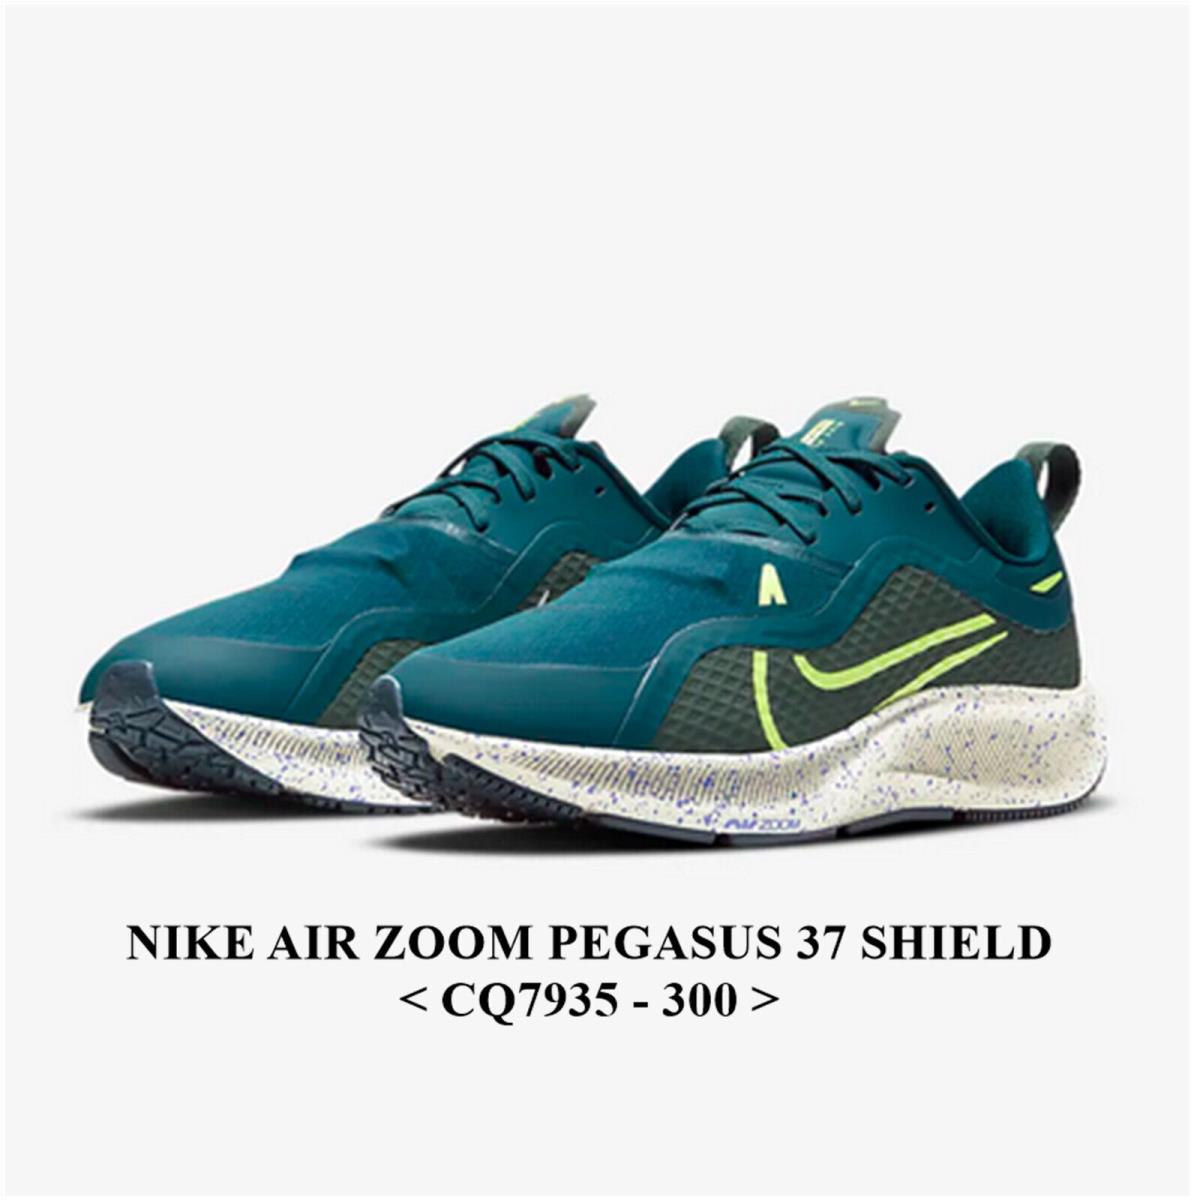 Nike Air Zoom Pegasus 37 Shield CQ7935 - 300 Men`s Running Shoes